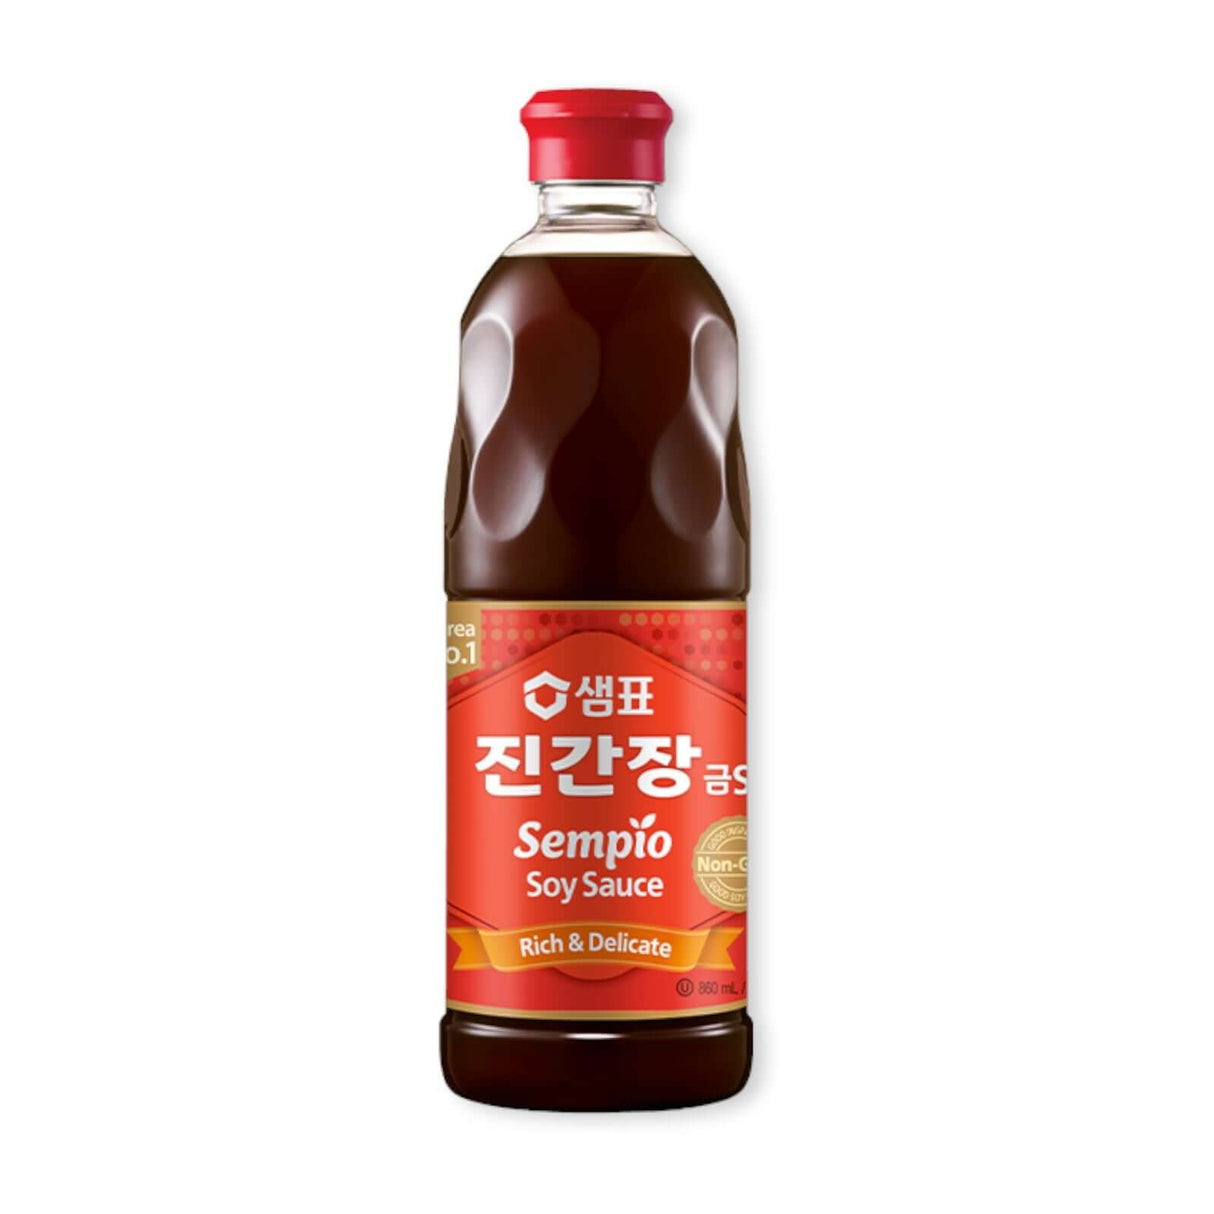 Sempio Soy Sauce Jin Gold S (Rich & Delicate)